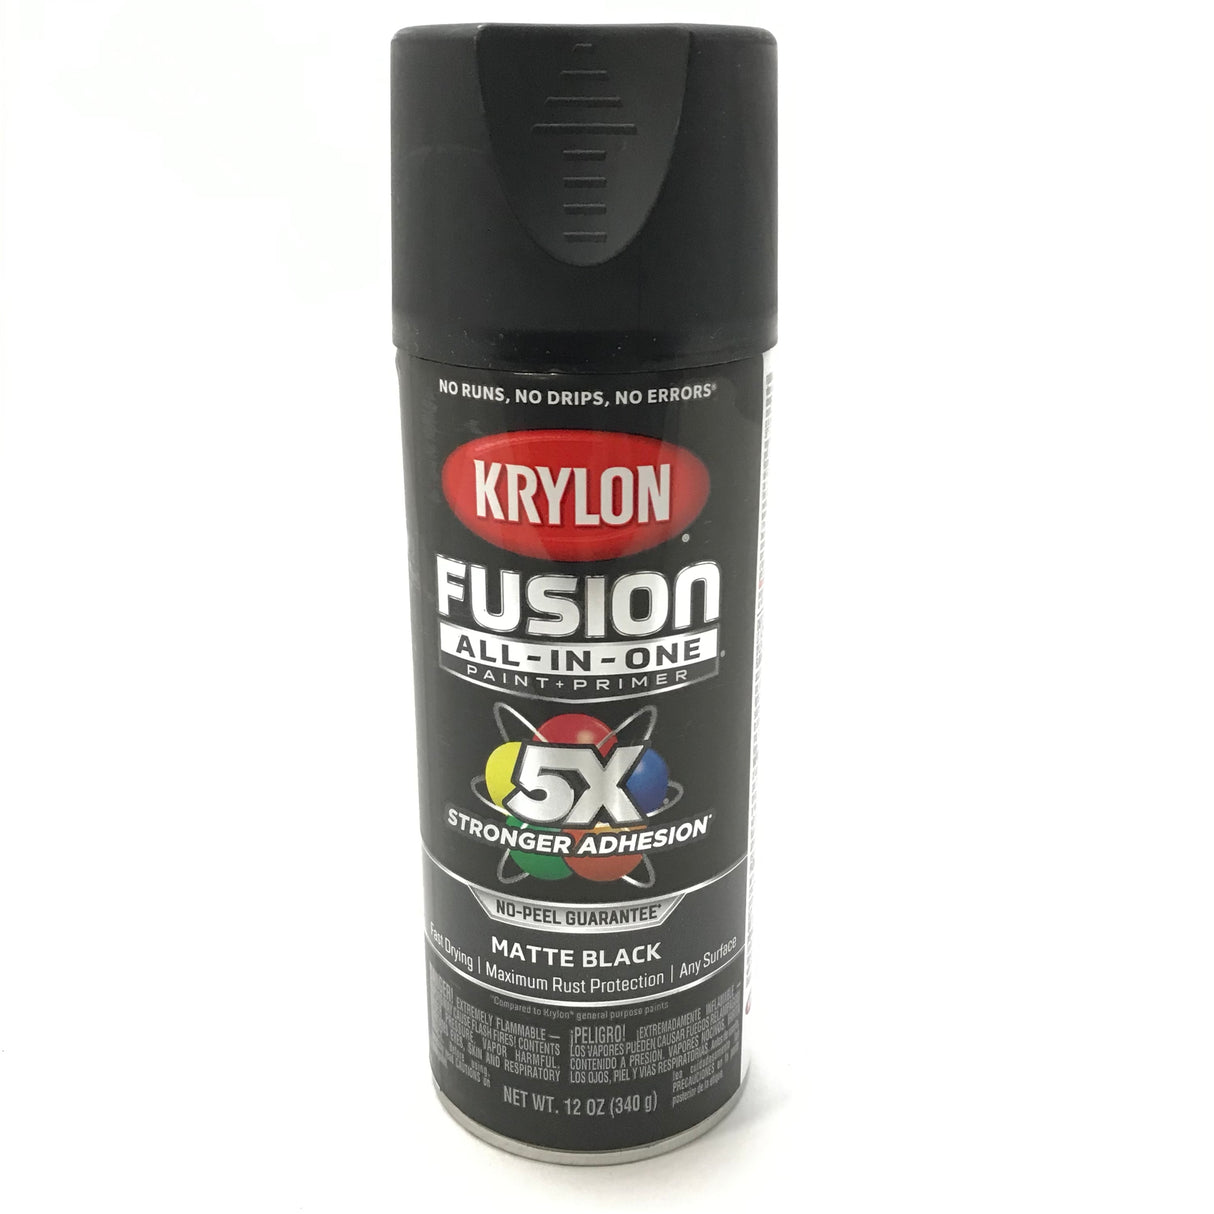 KRYLON 2754 MATTE BLACK All-In-One Fusion Paint & Primer - No-Peel - 12 oz Aerosol